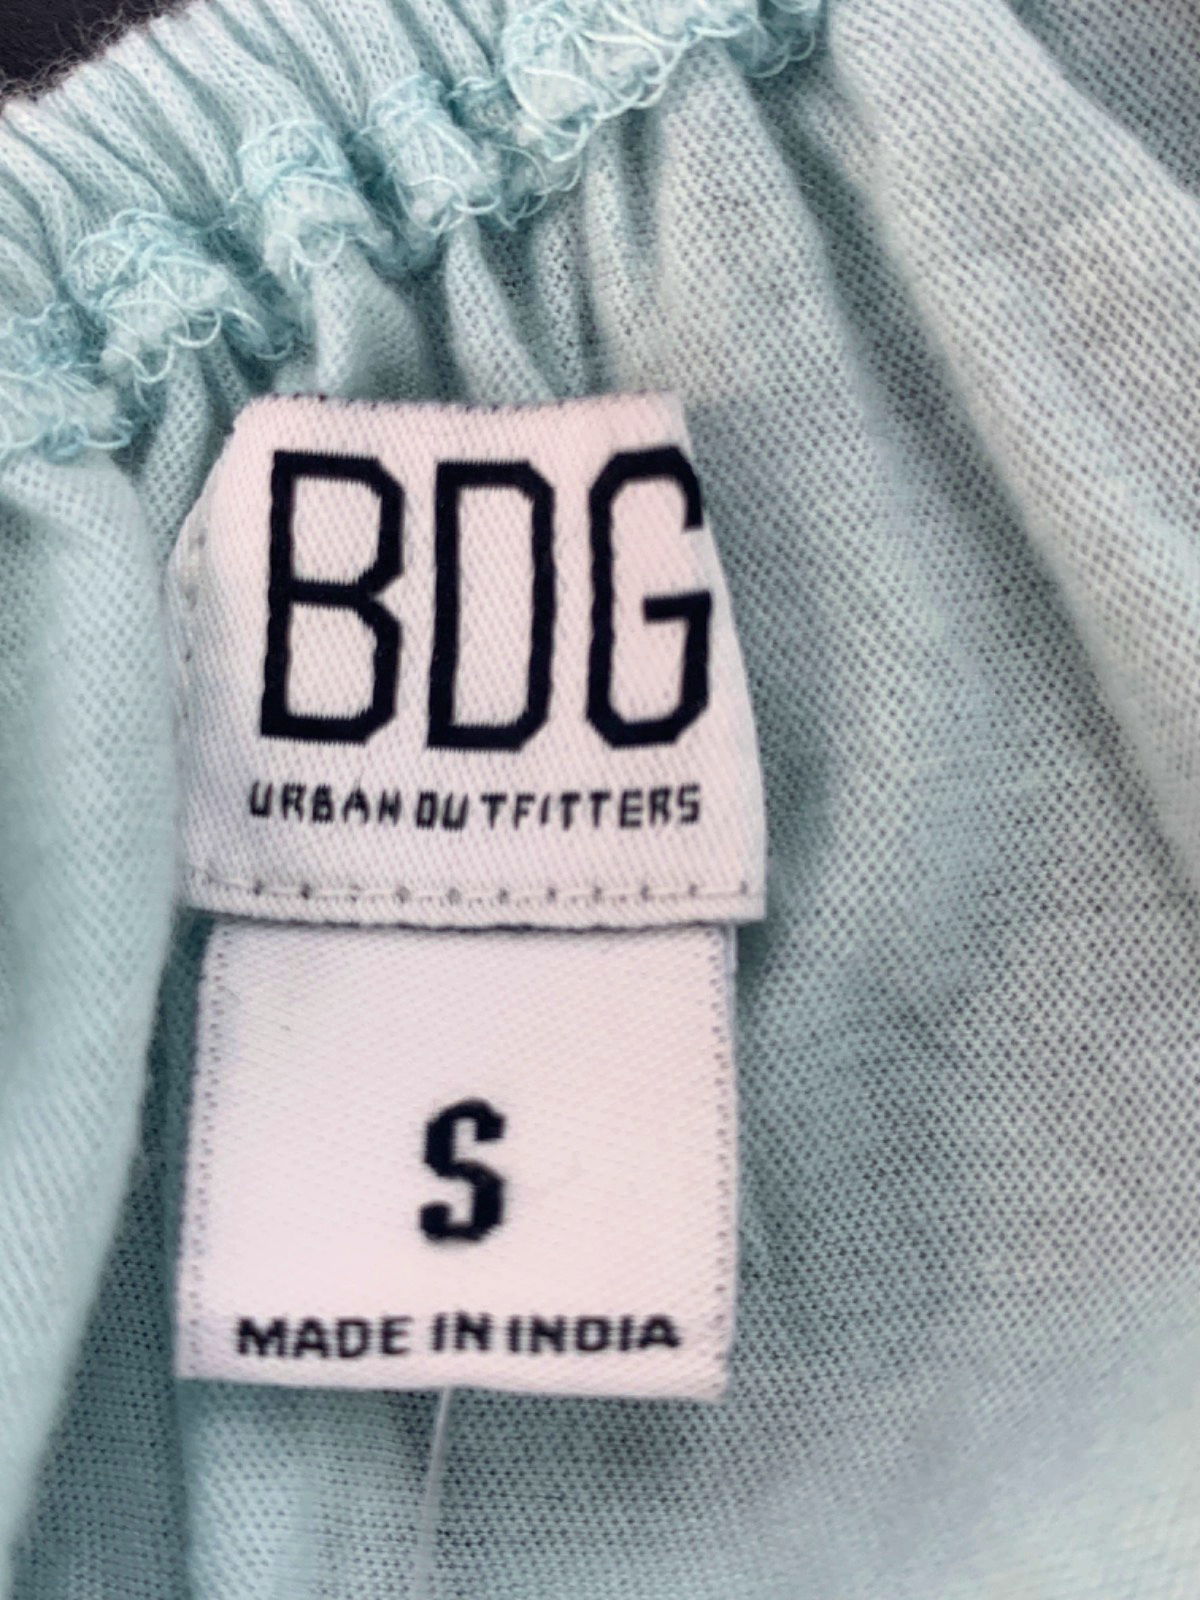 BDG Urban Outfitters Light Blue Crochet Crop Top Small